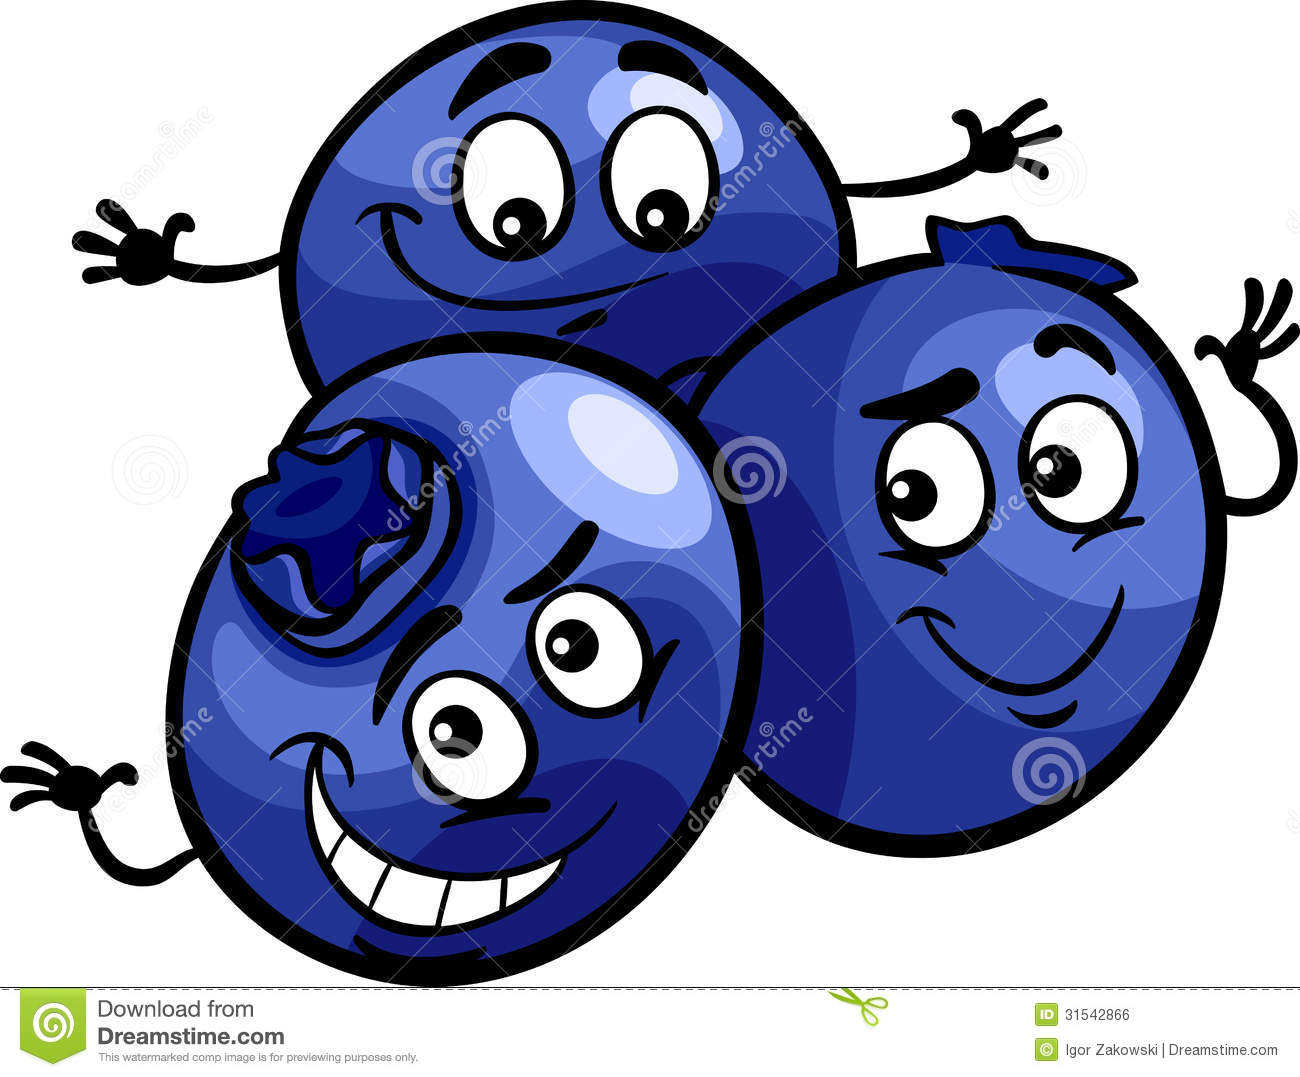 Funny Blueberry Fruits Cartoon Illustration Royalty Free Stock Image